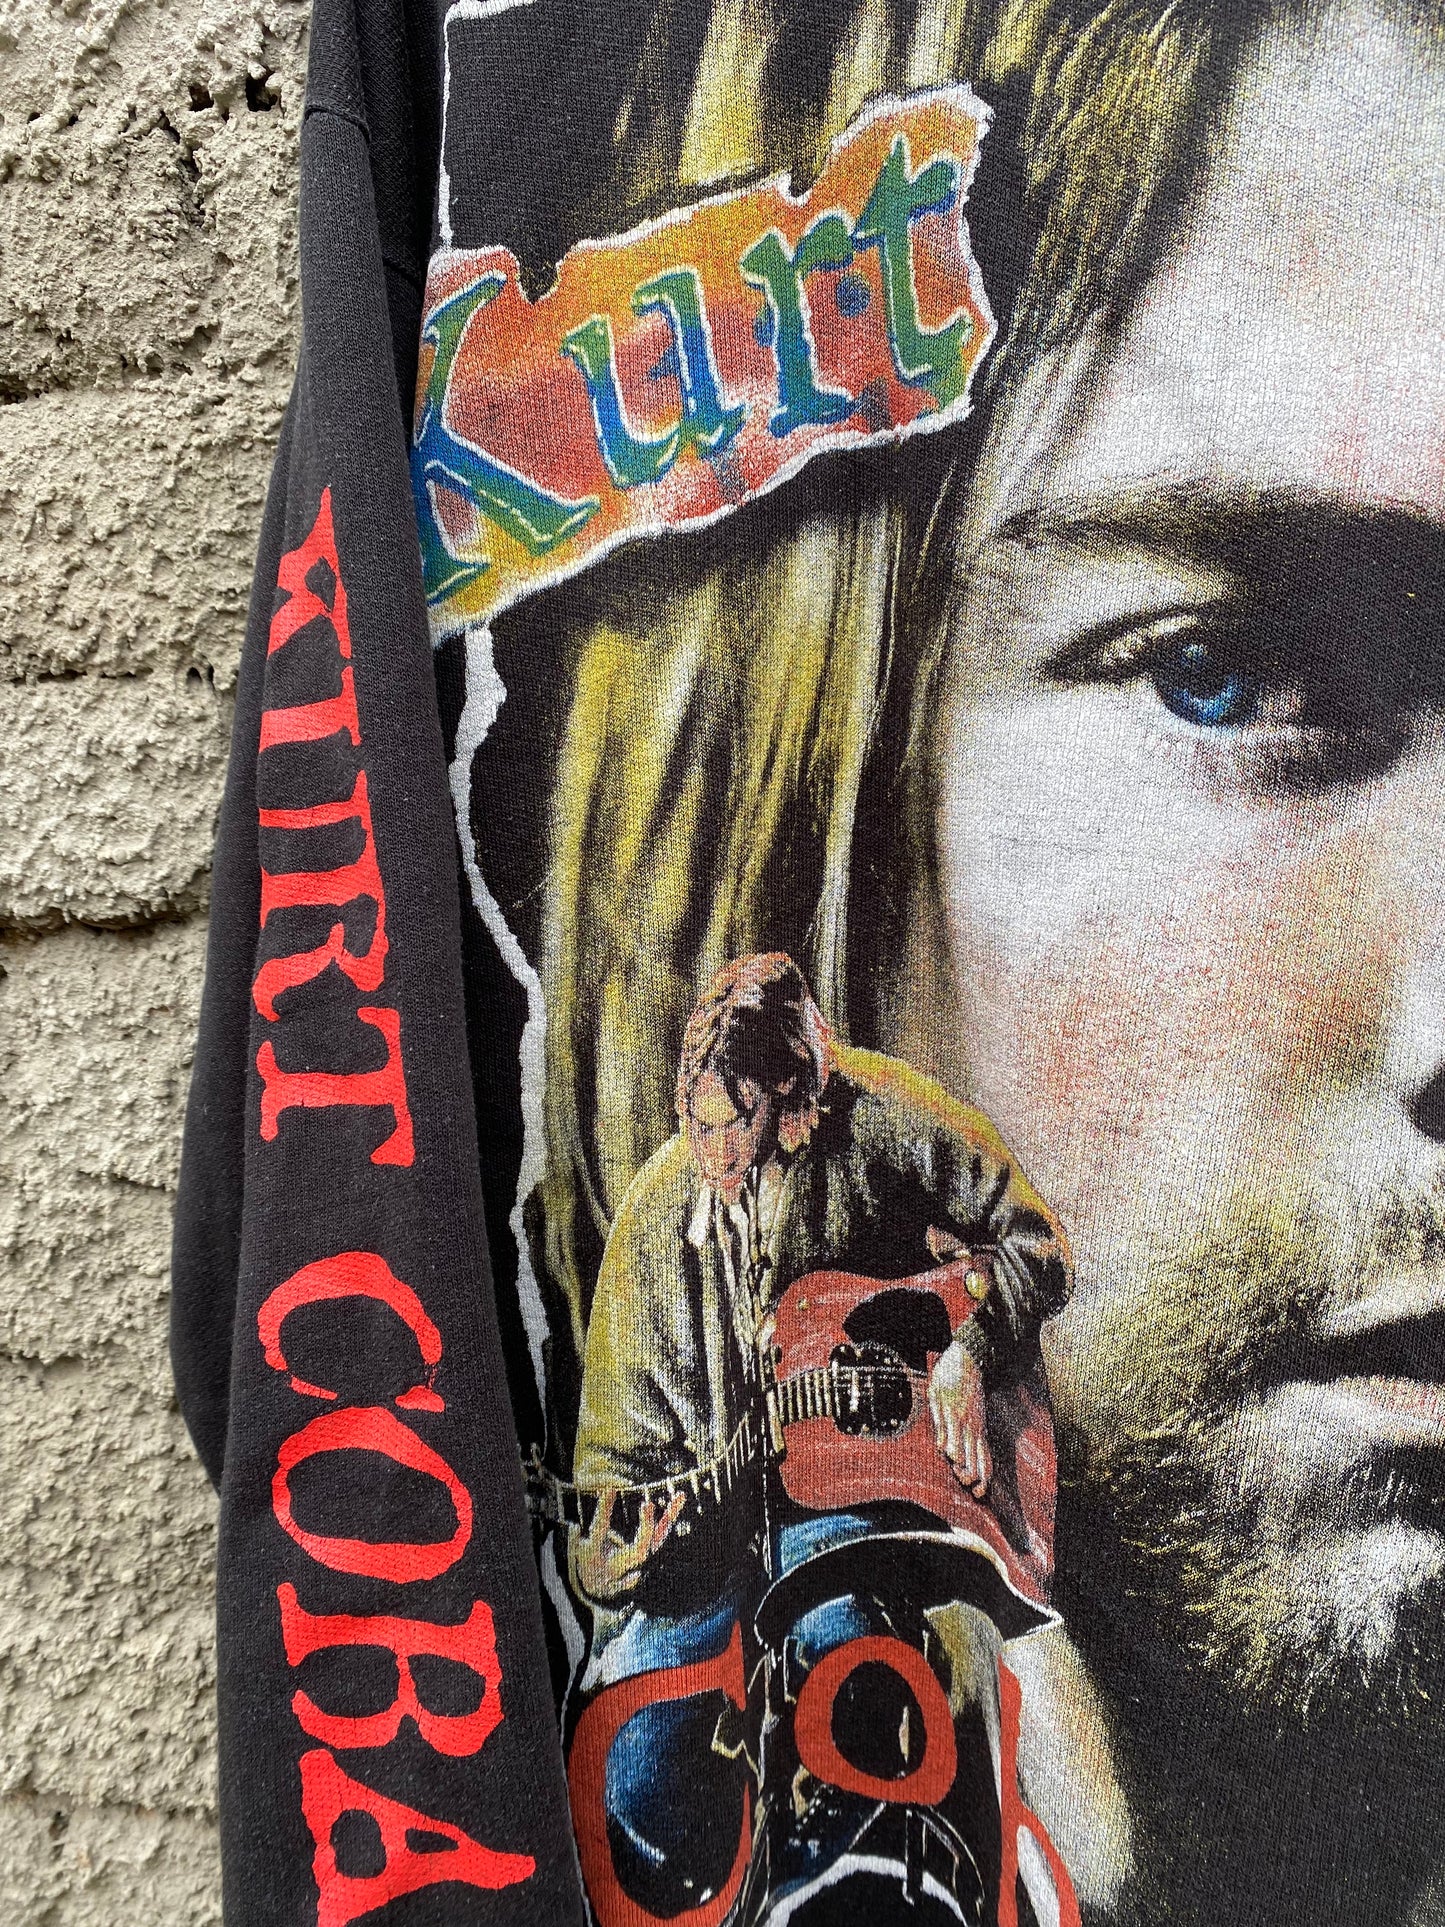 Vintage Kurt Cobain 90s hoodie - size L